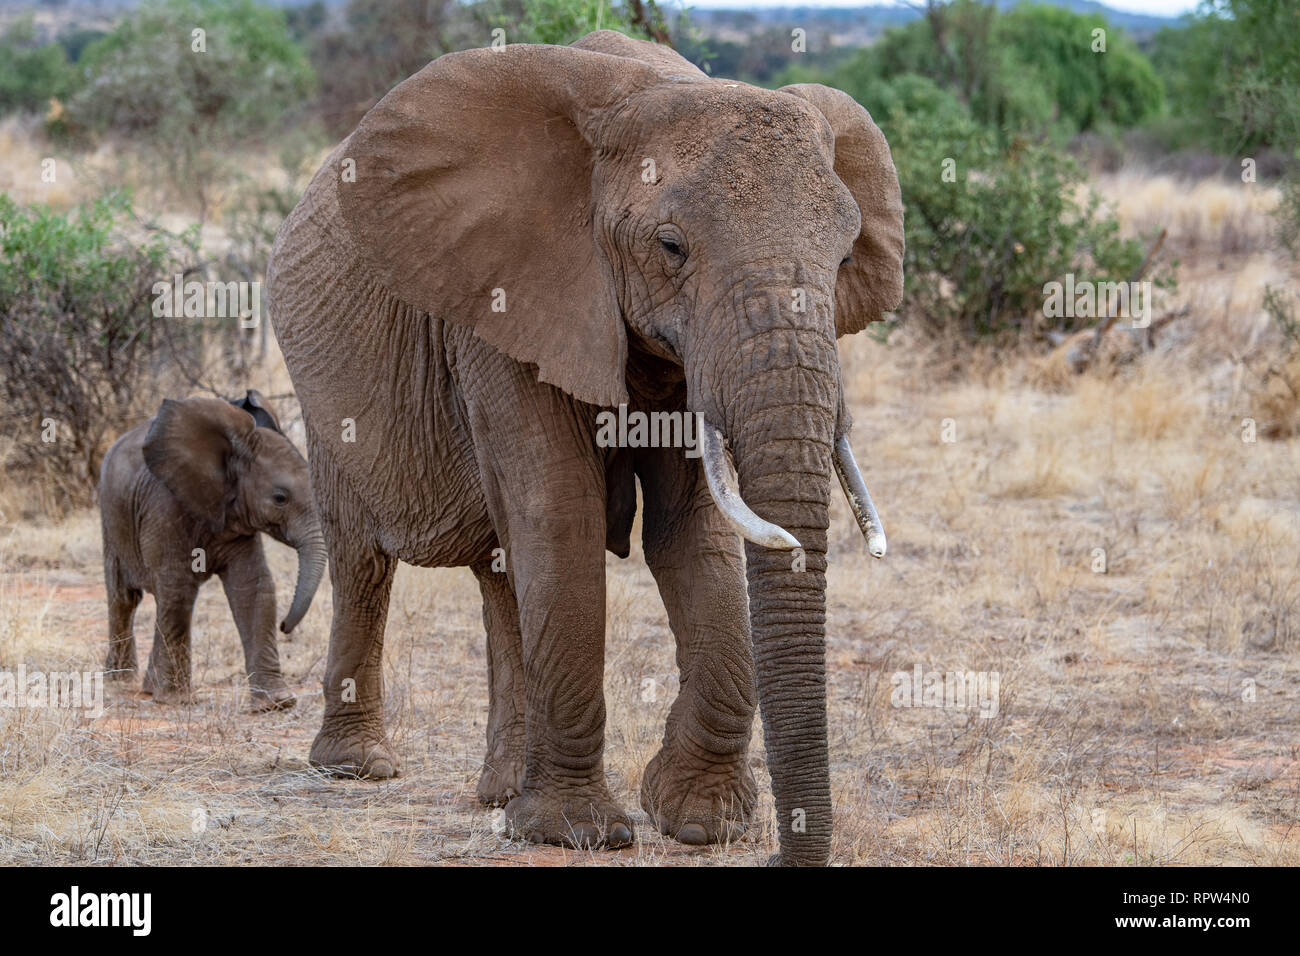 African baby bush elephant (Loxodanta africana) in Kenya Stock Photo